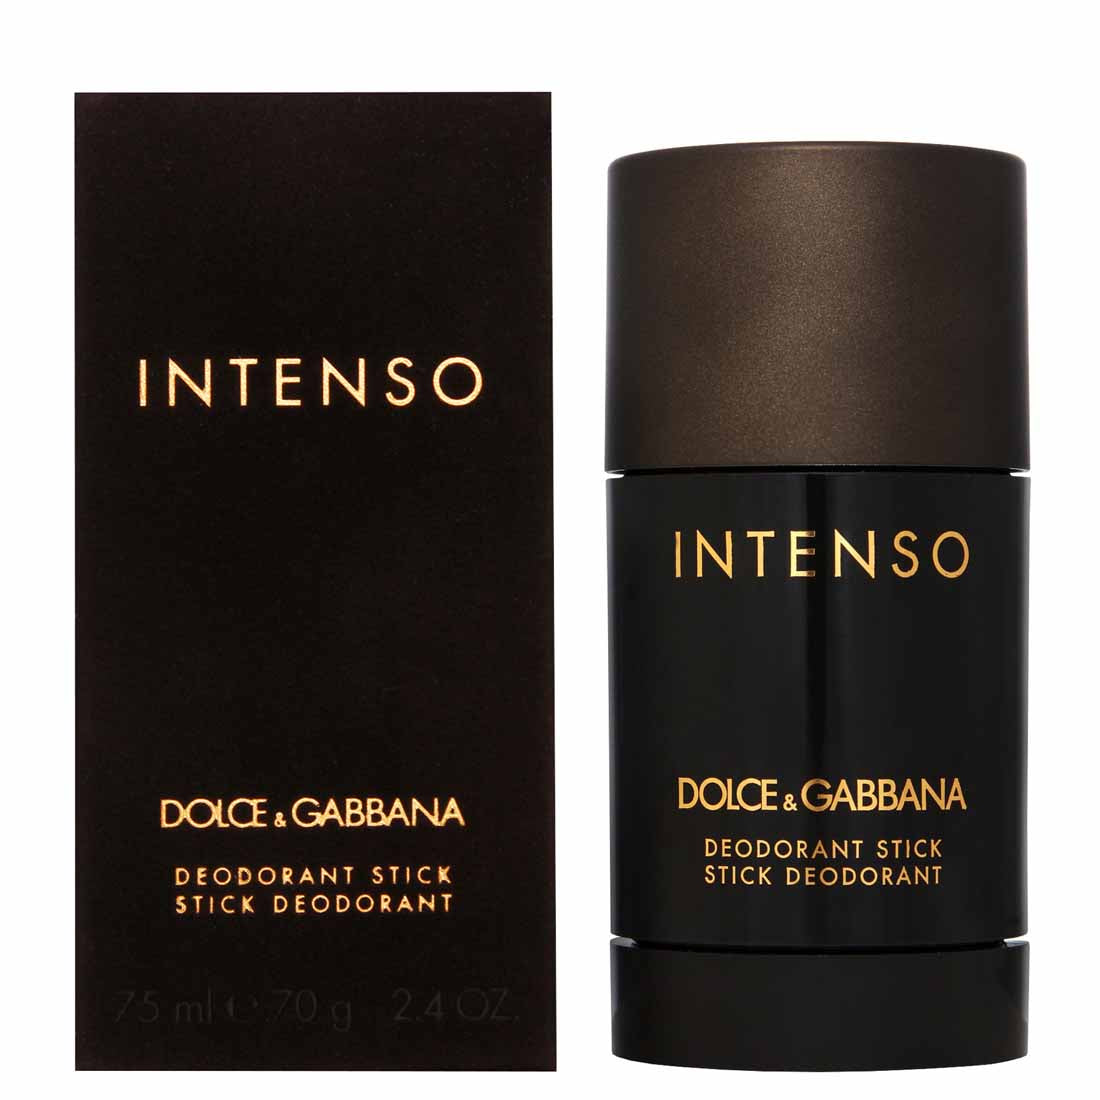 Dolce & Gabbana Intenso Deodorant Stick 75ml